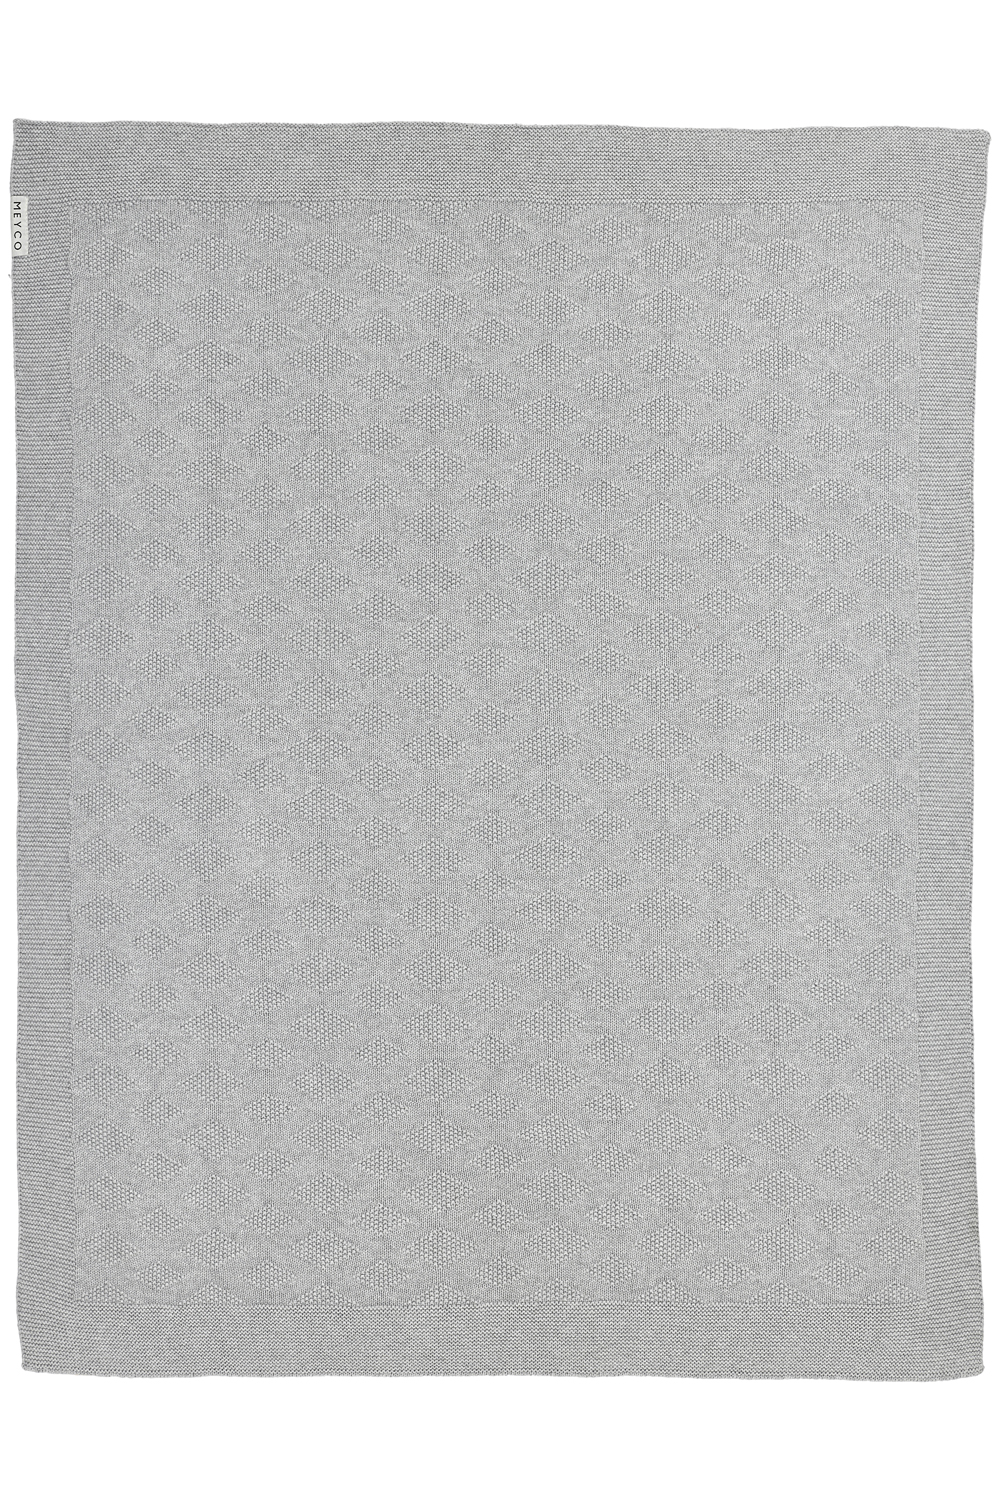 Ledikant deken biologisch Diamond - grey melange - 100x150cm